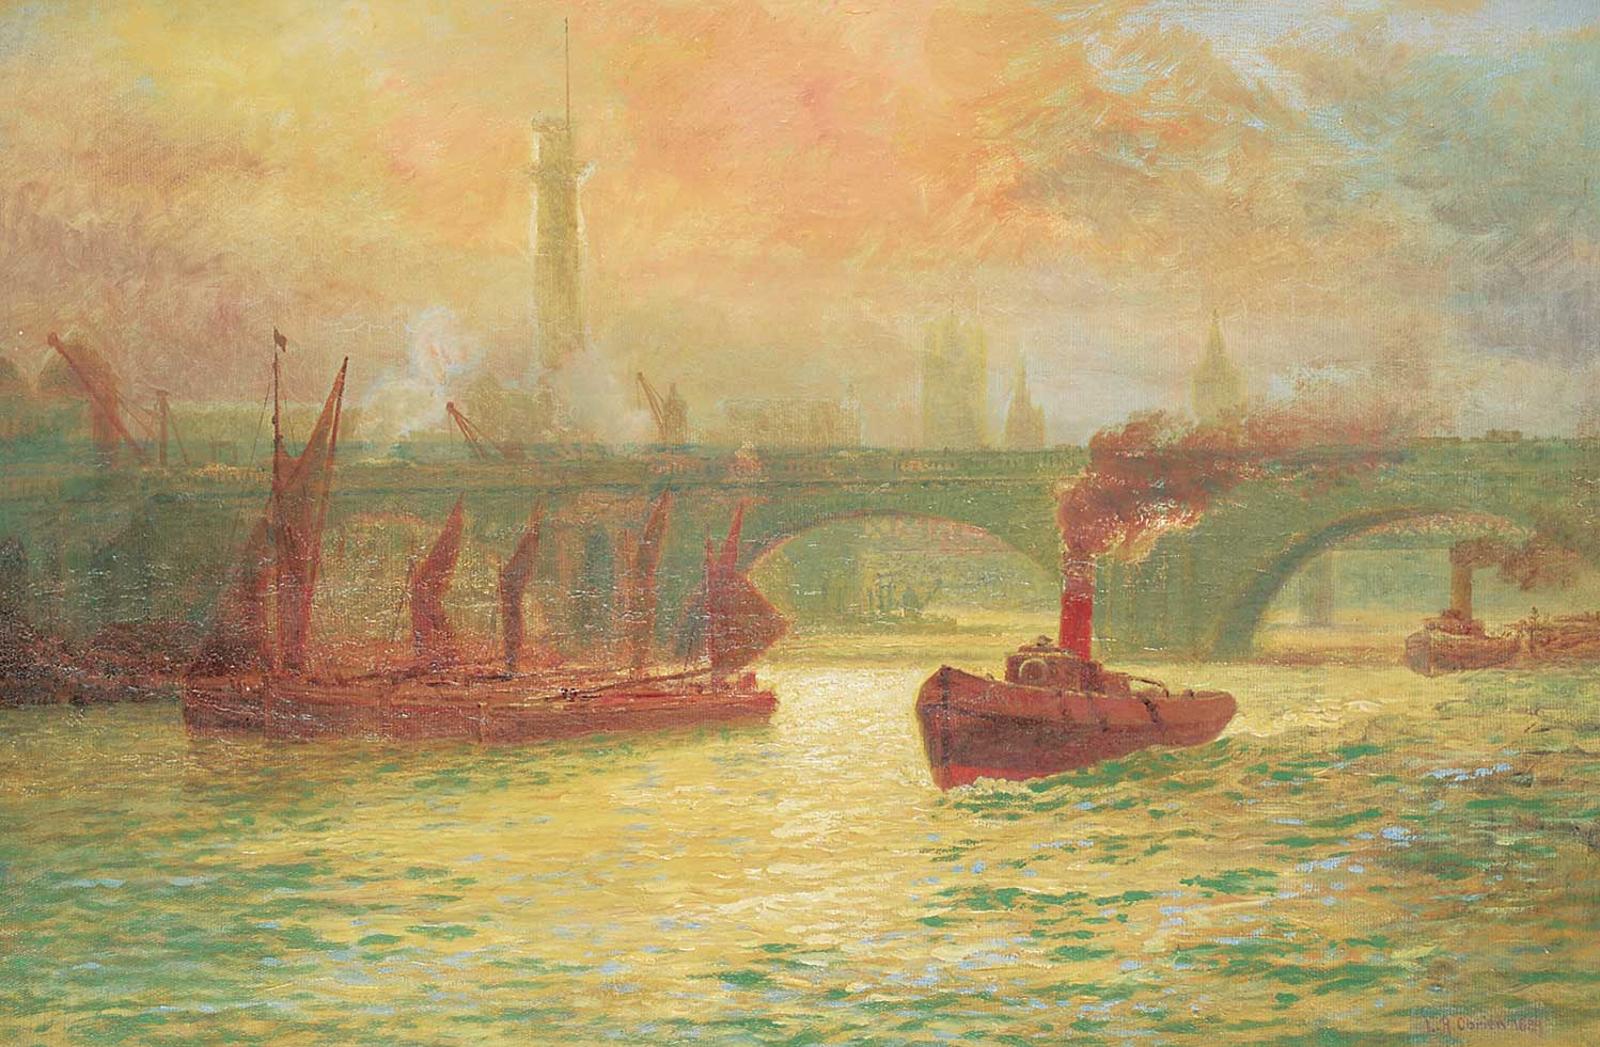 Lucius Richard O'Brien (1832-1899) - On the Thames